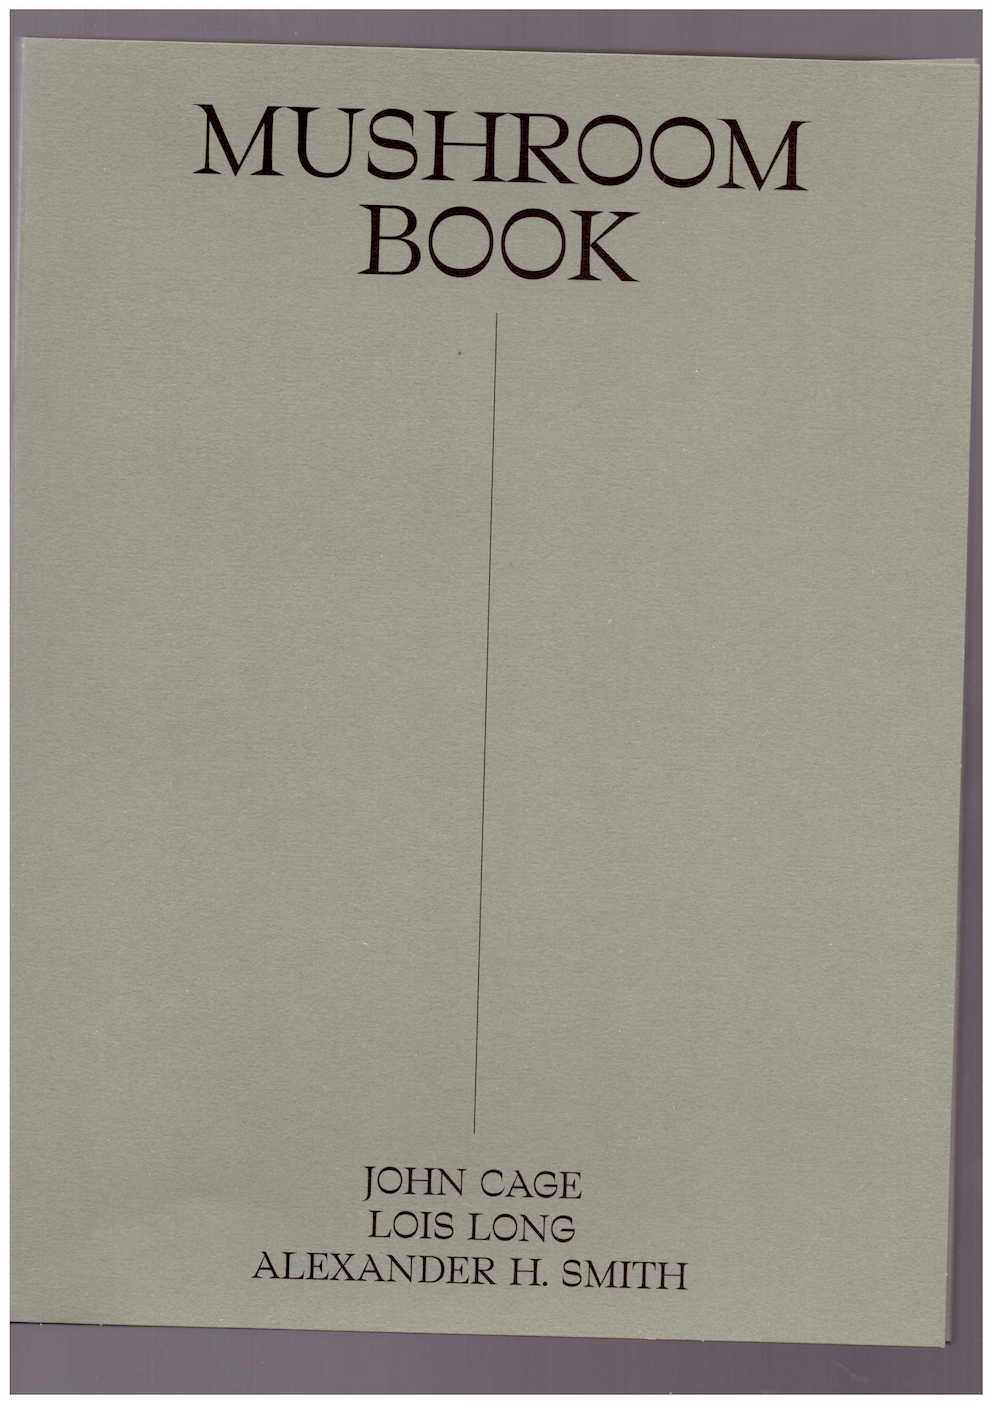 CAGE, John; PELLERIN, Ananda (ed.) - John Cage: A Mycological Foray—Variations on Mushrooms